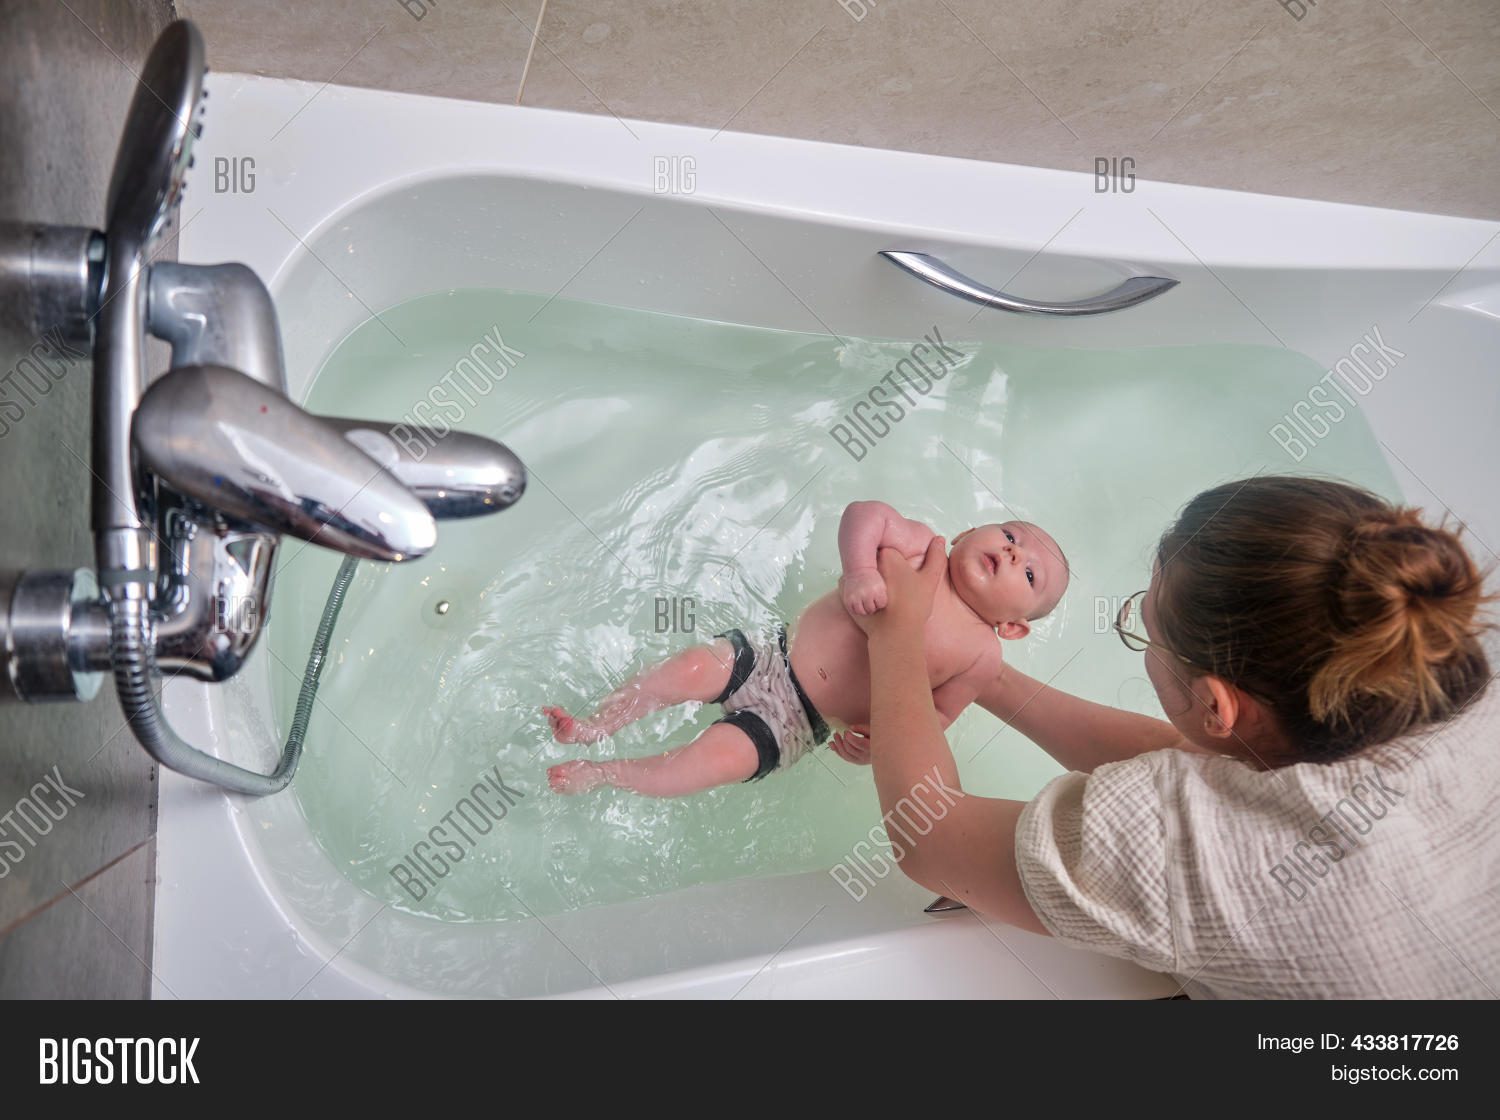 david maez recommends mom helps son bath pic